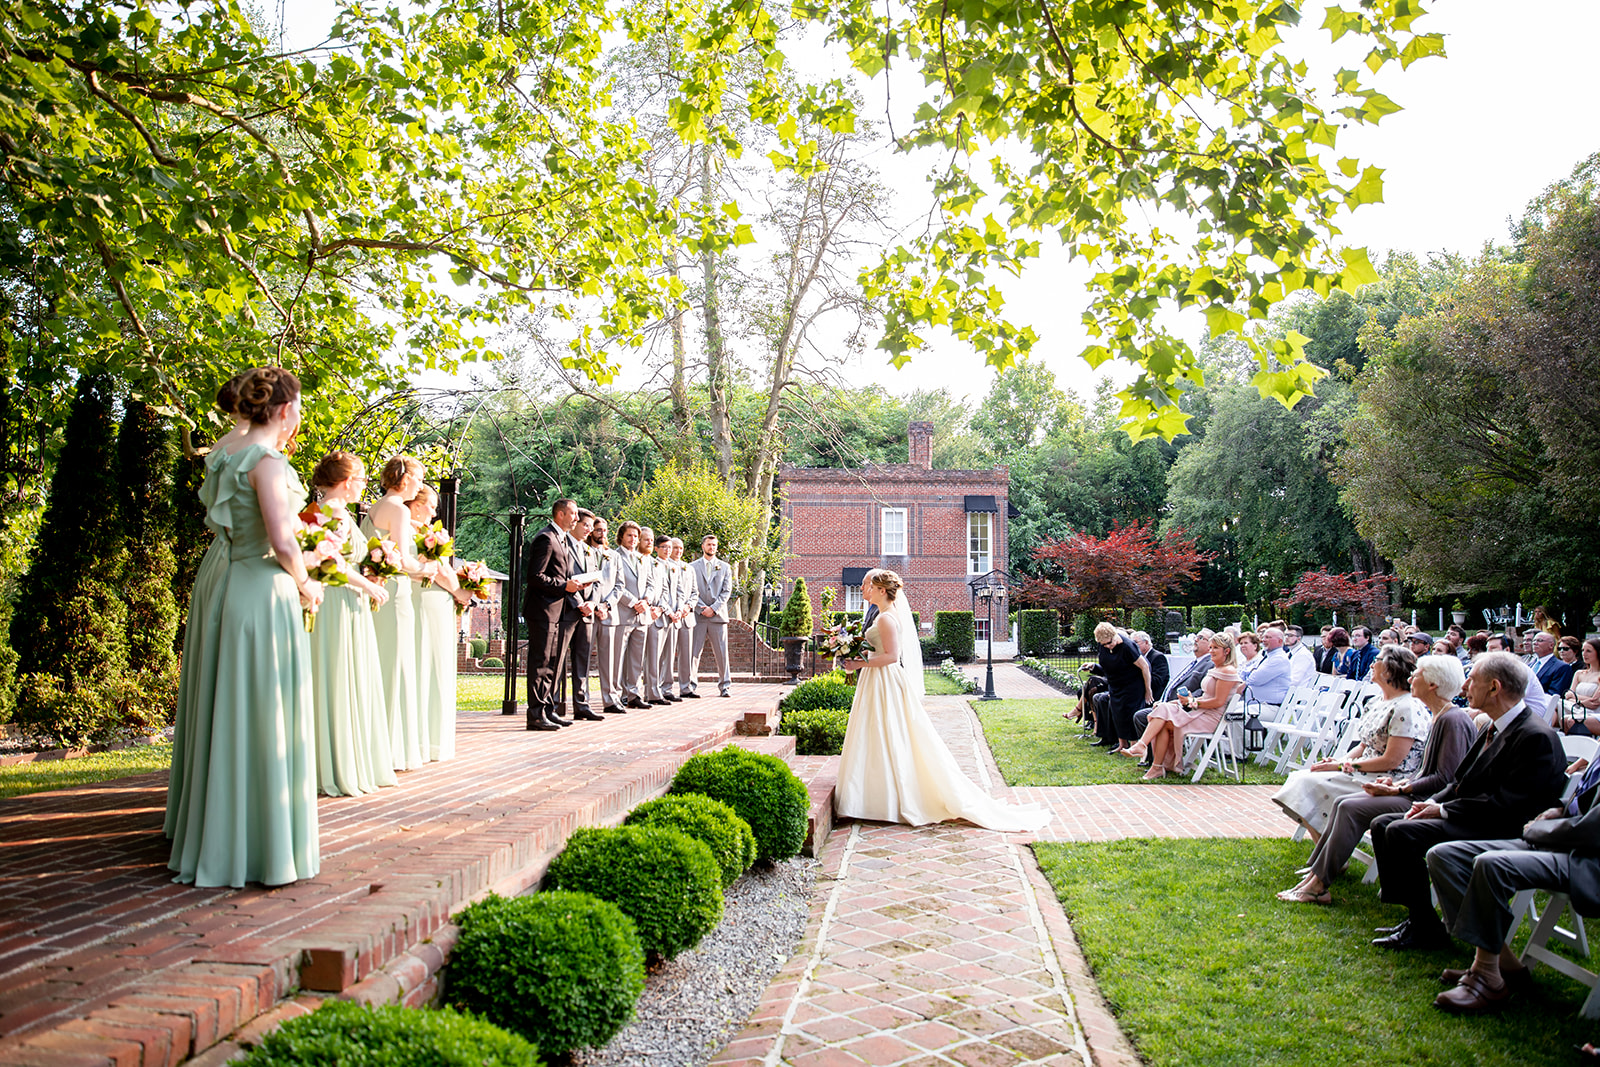 Rachel  Brennens Wedding at Historic Mankin Mansion - Image Property of www.j-dphoto.com